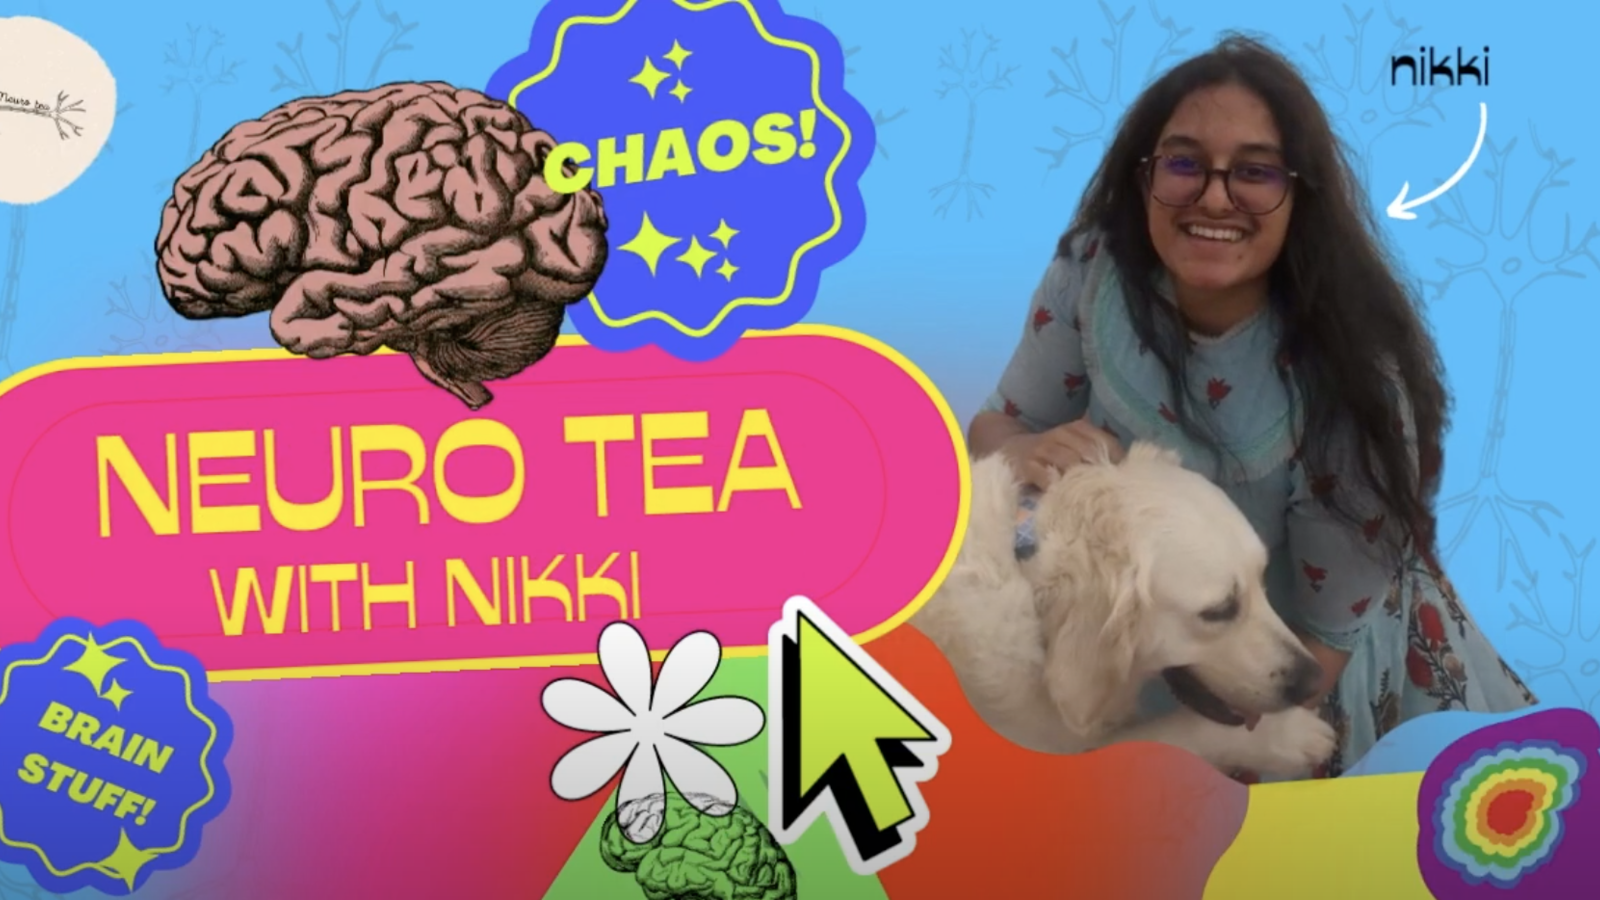 An illustrative cover for "Neuro Tea" podcast